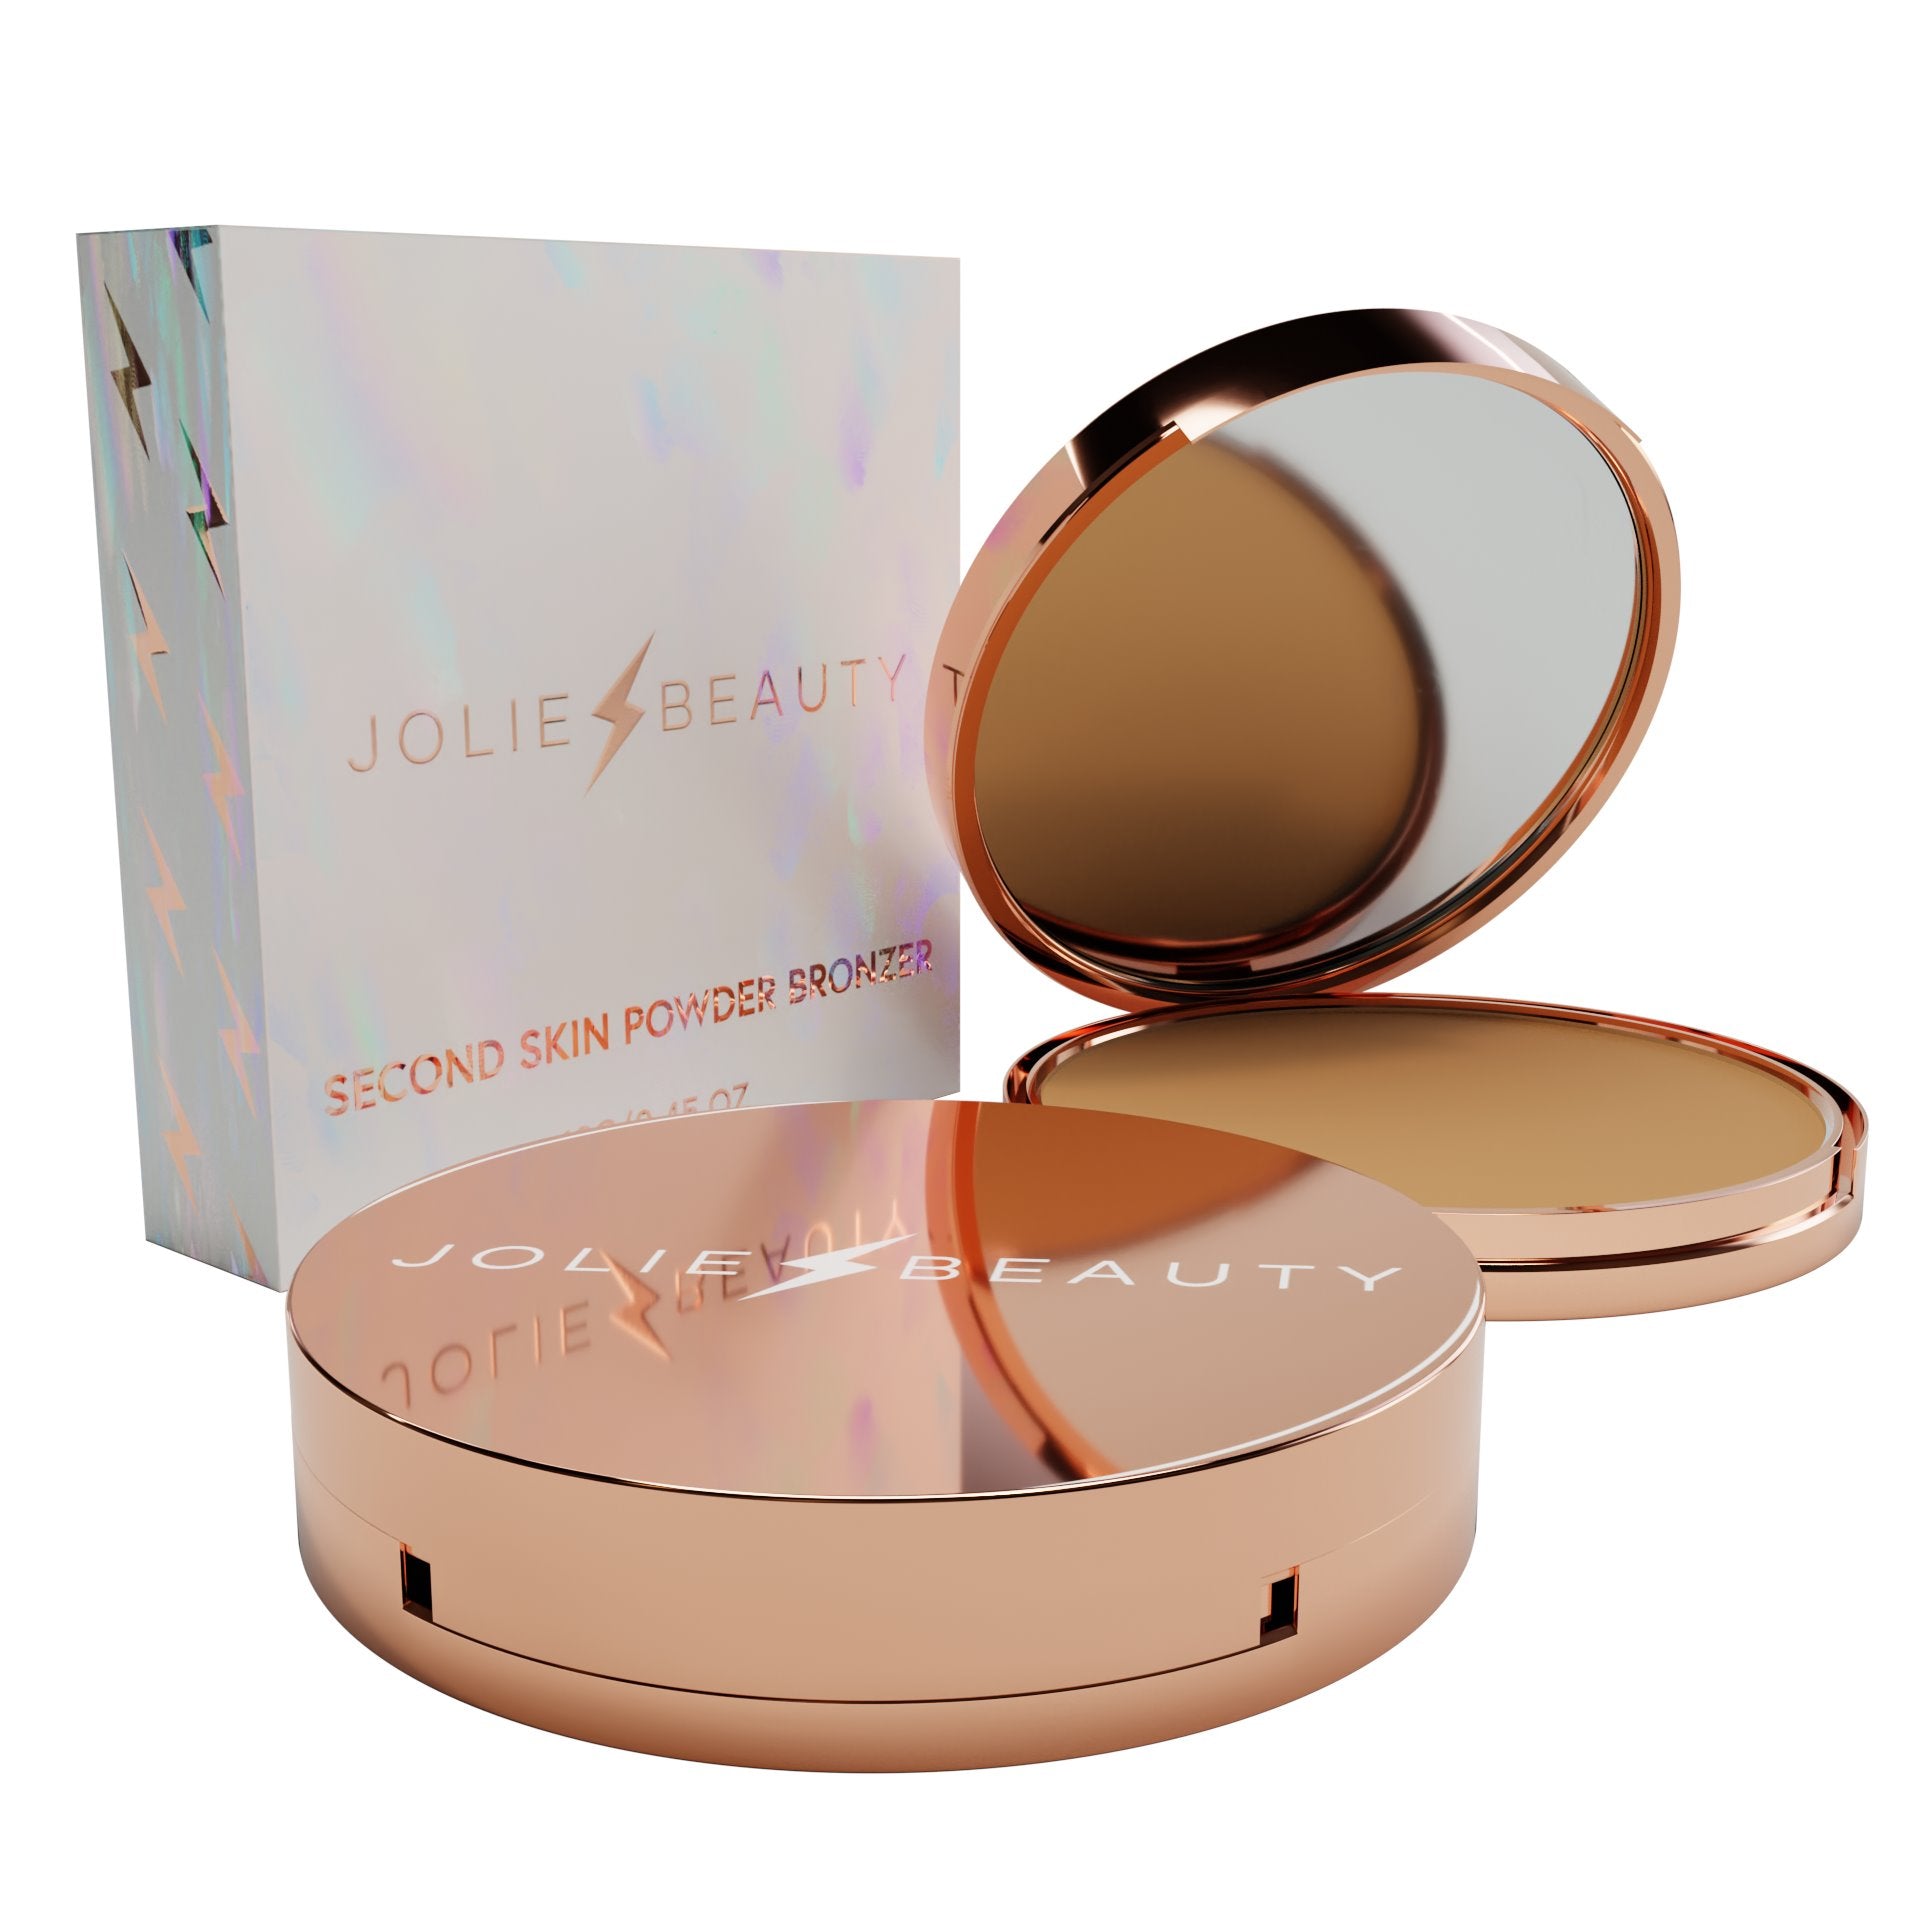 Second Skin Powder Bronzer - Shade 01. Latte - Jolie Beauty